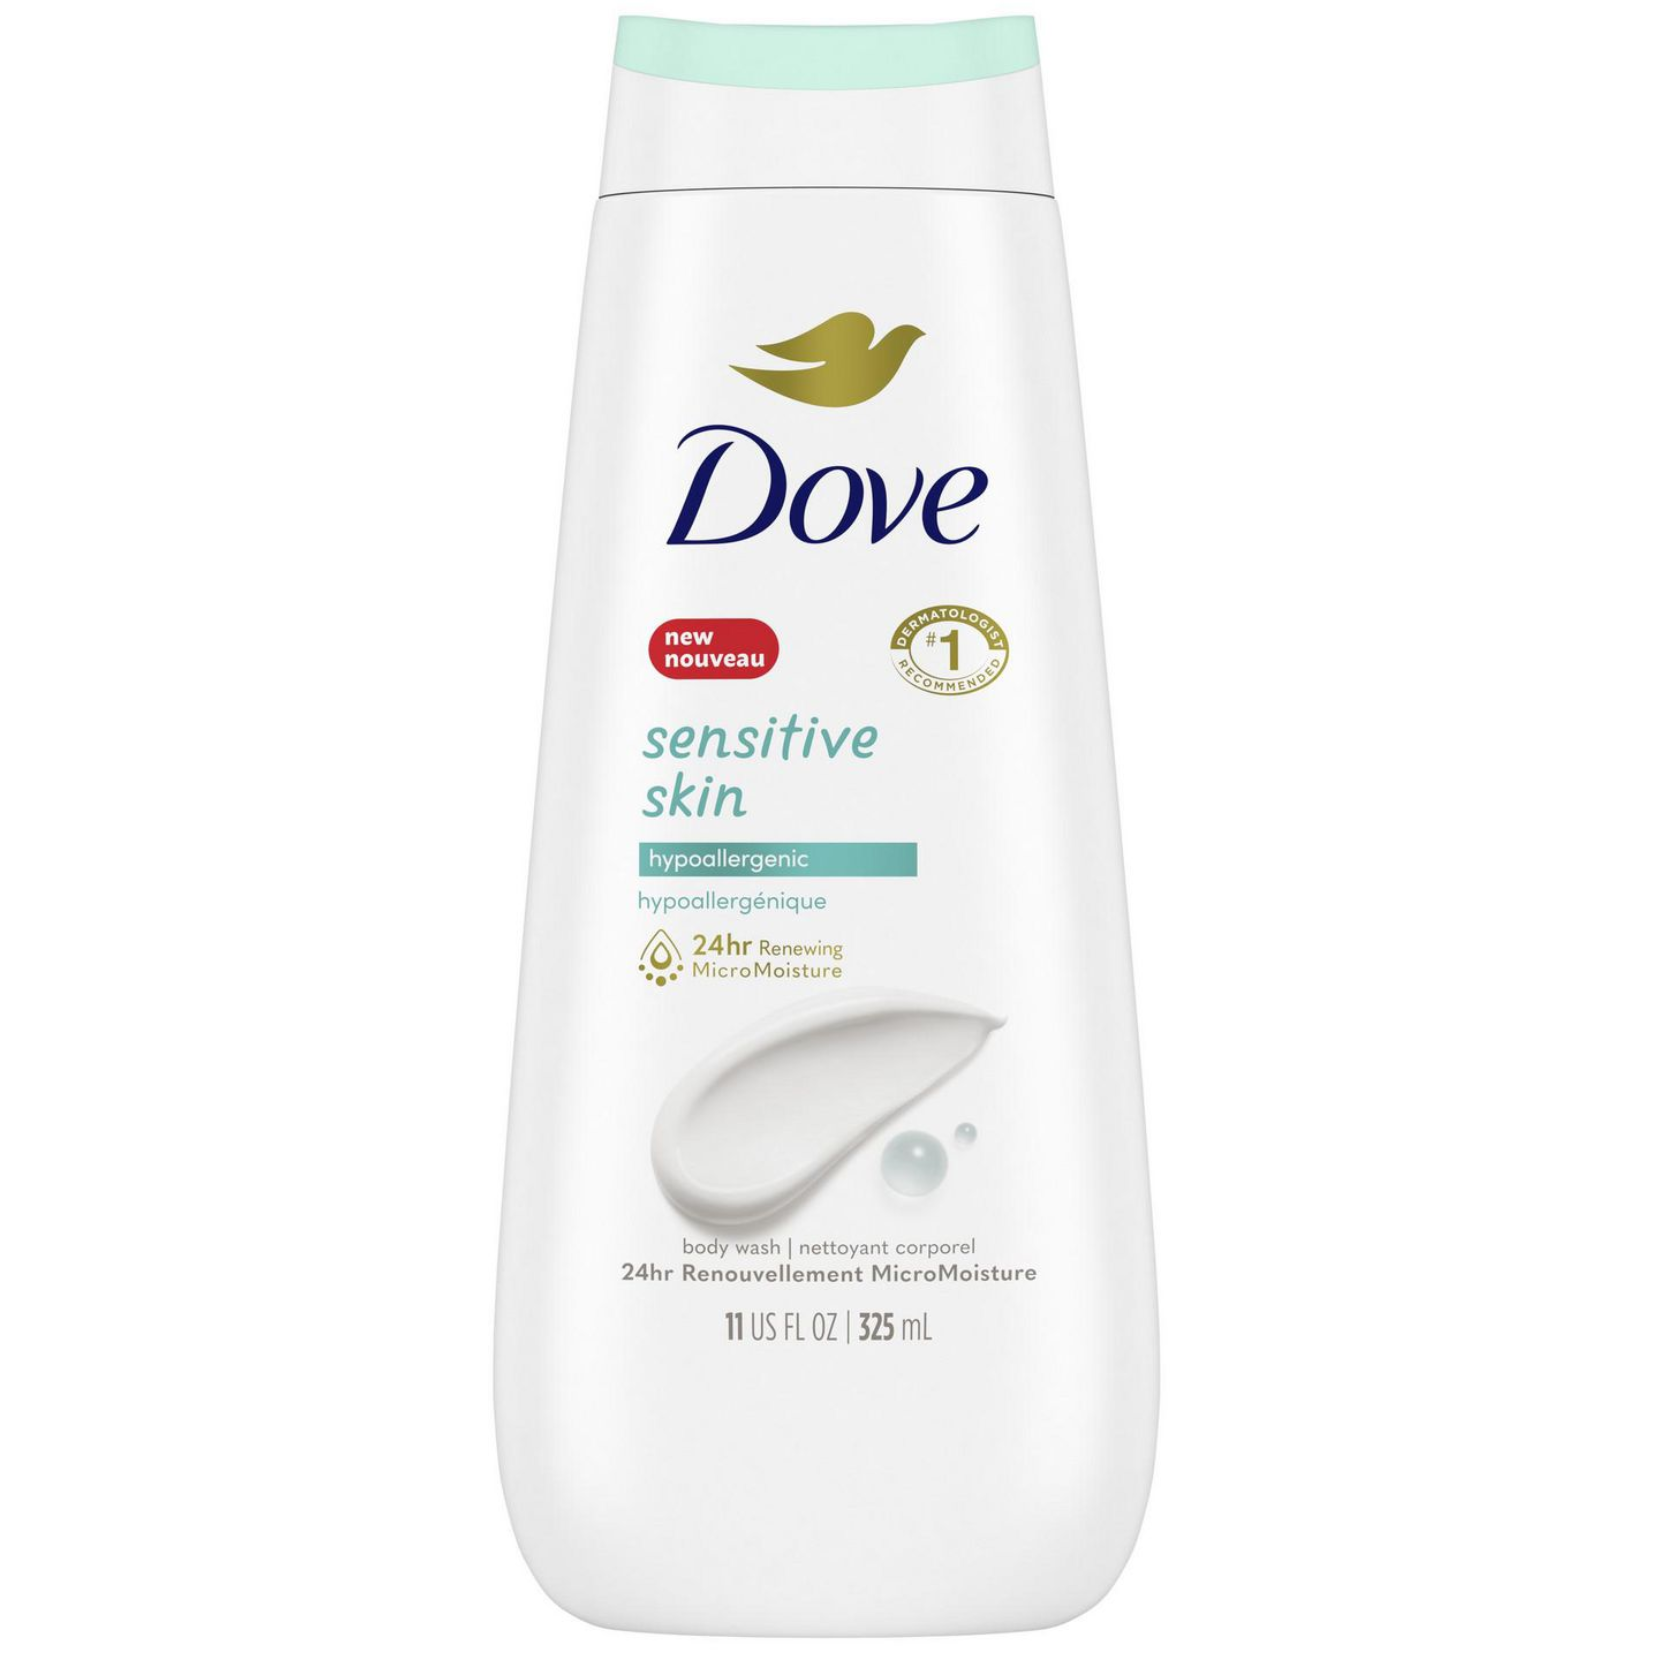 Dove Sensitive Skin Body Wash 325ml